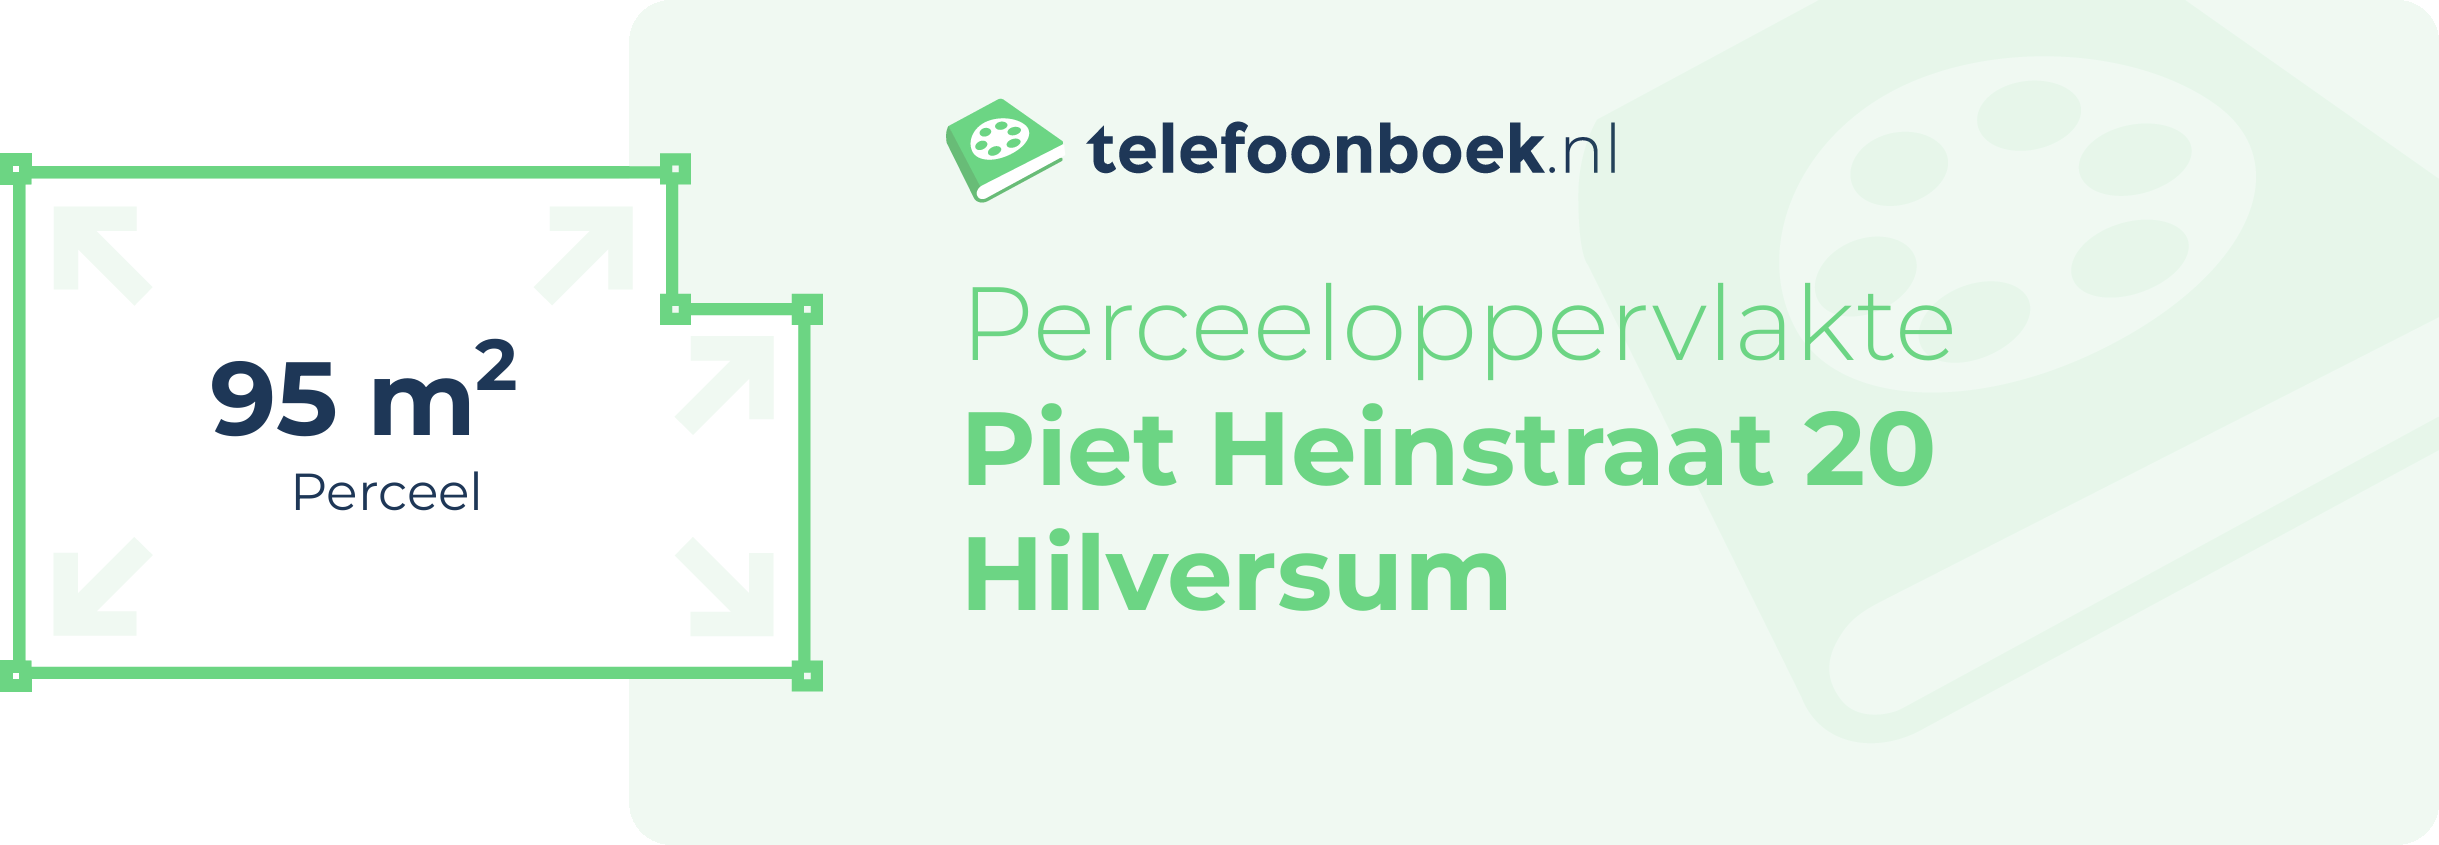 Perceeloppervlakte Piet Heinstraat 20 Hilversum